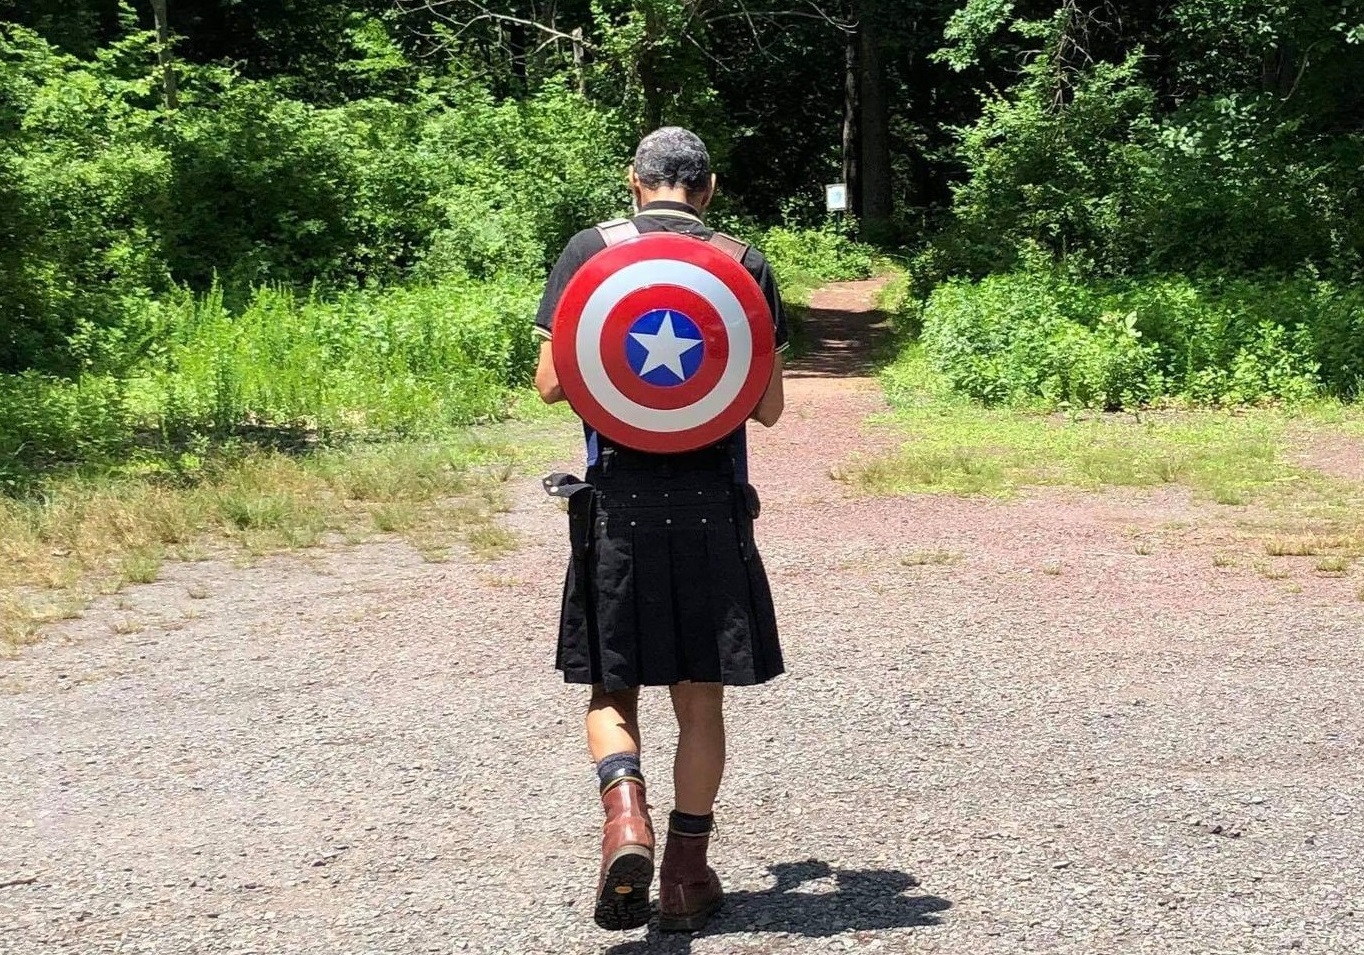 Pedro Serrano with Captain America shield backpack